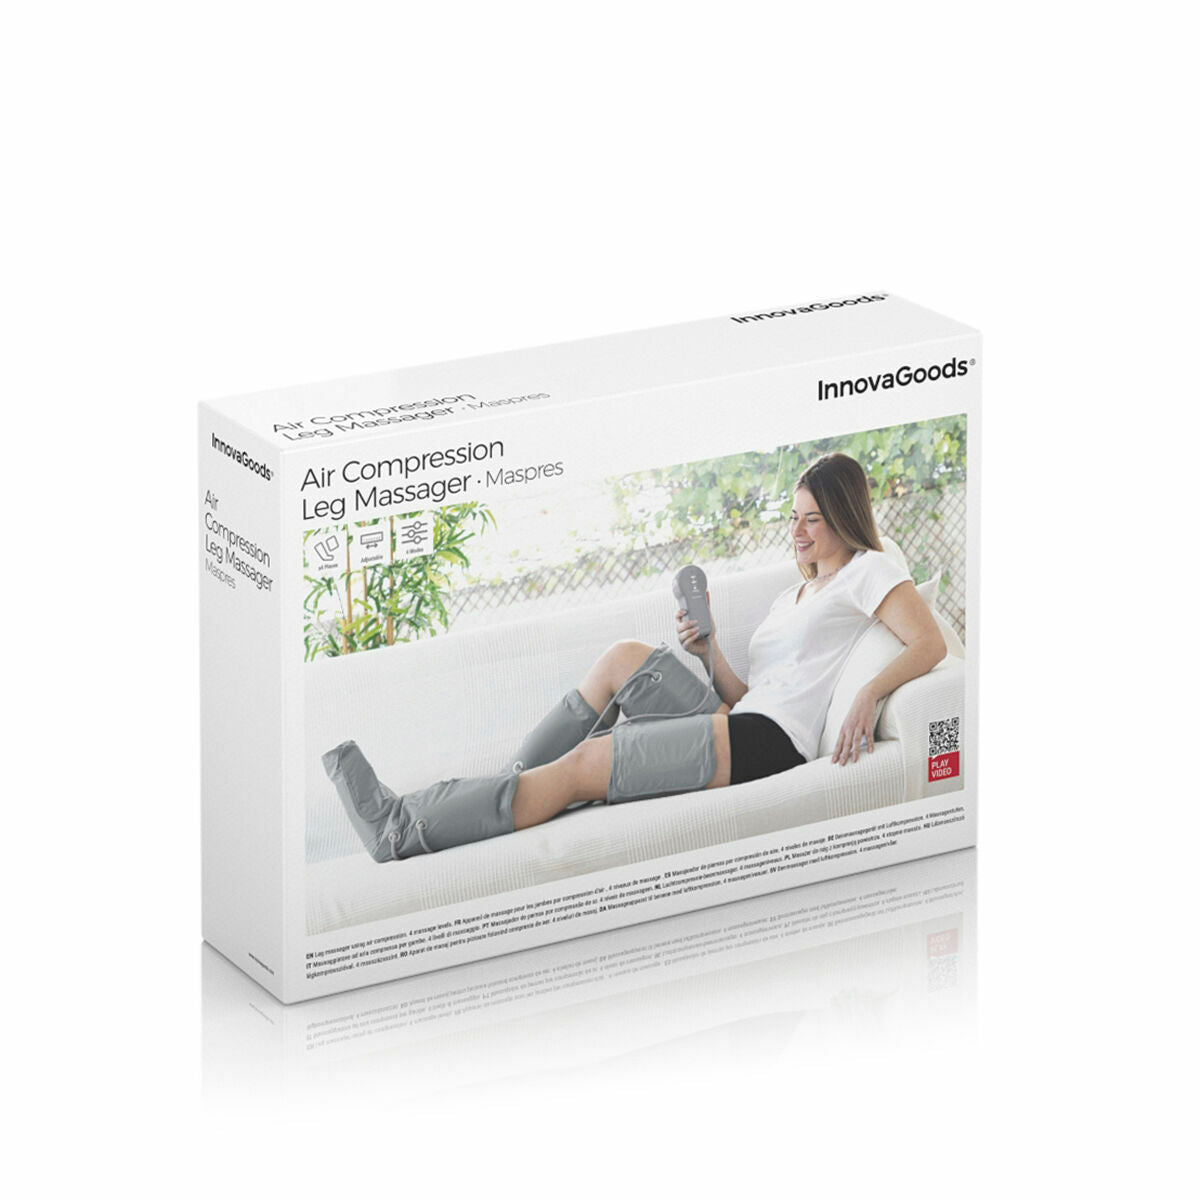 Air Compression Leg Massager Maspres InnovaGoods (Refurbished A) - Calm Beauty IE